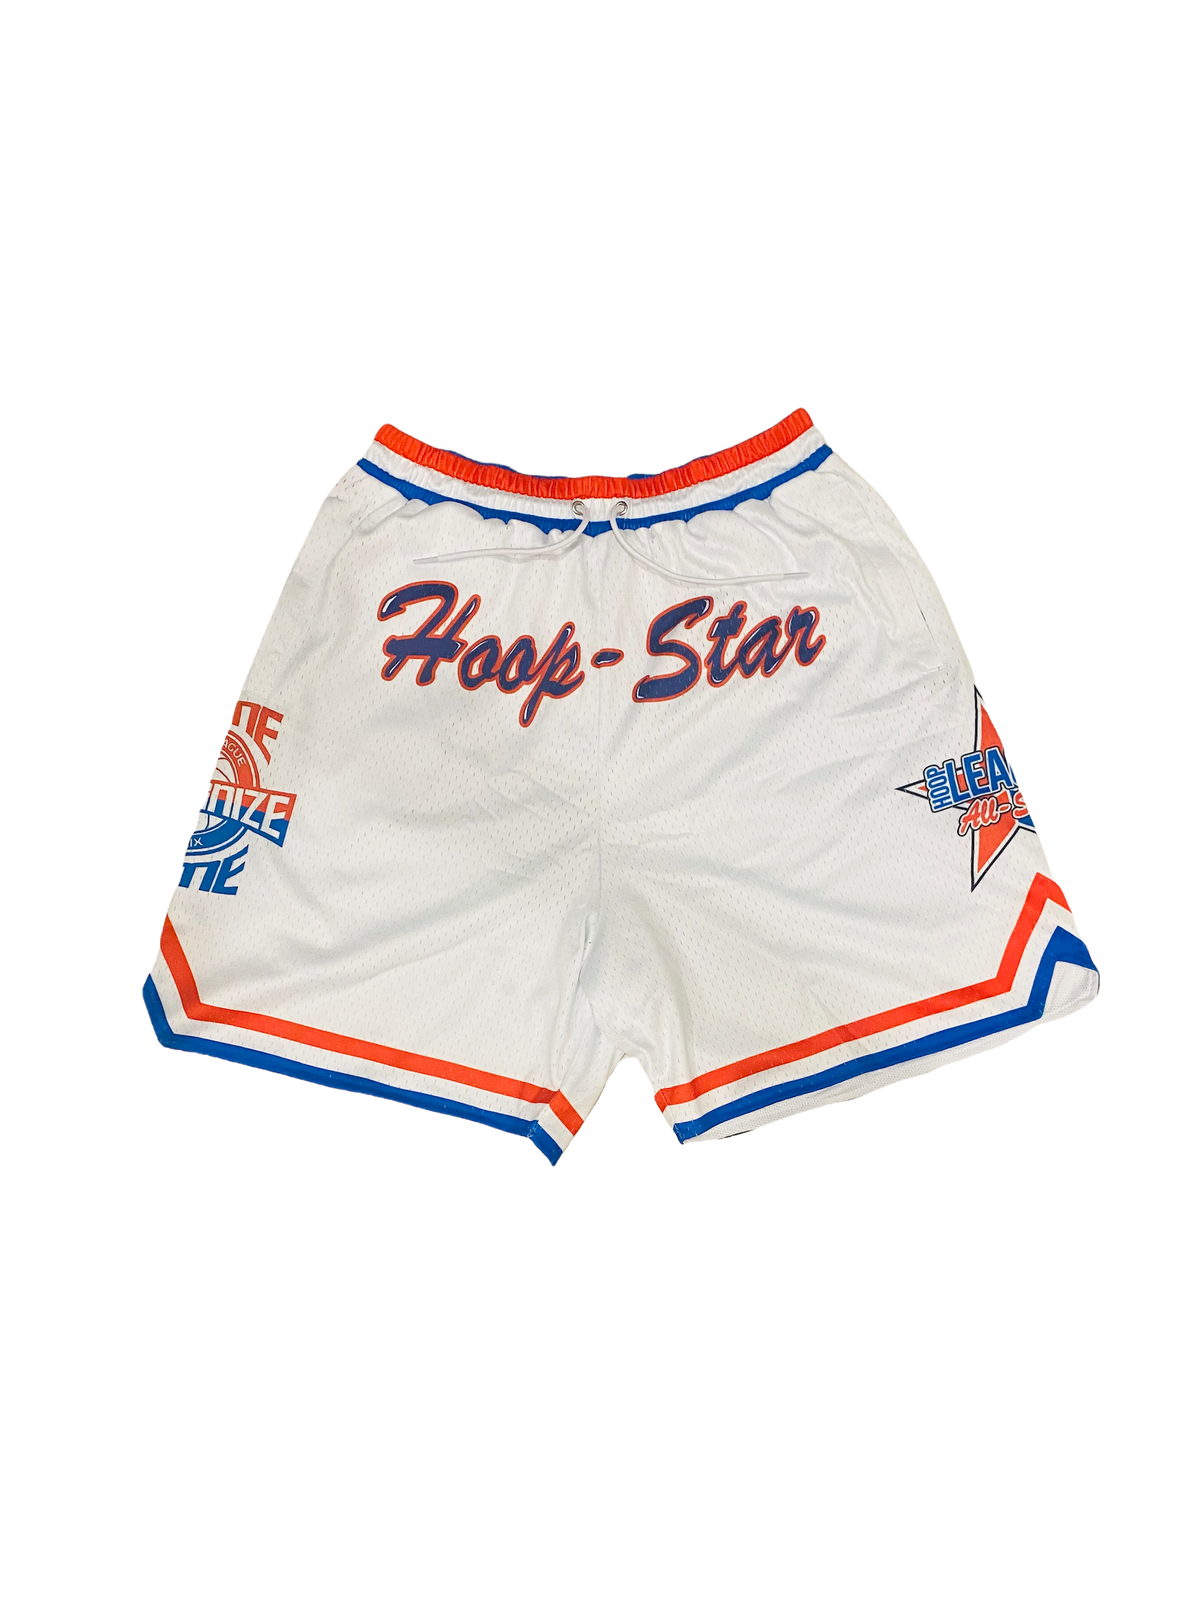 Hoop League Hoop-Star All-Star Game Shorts White